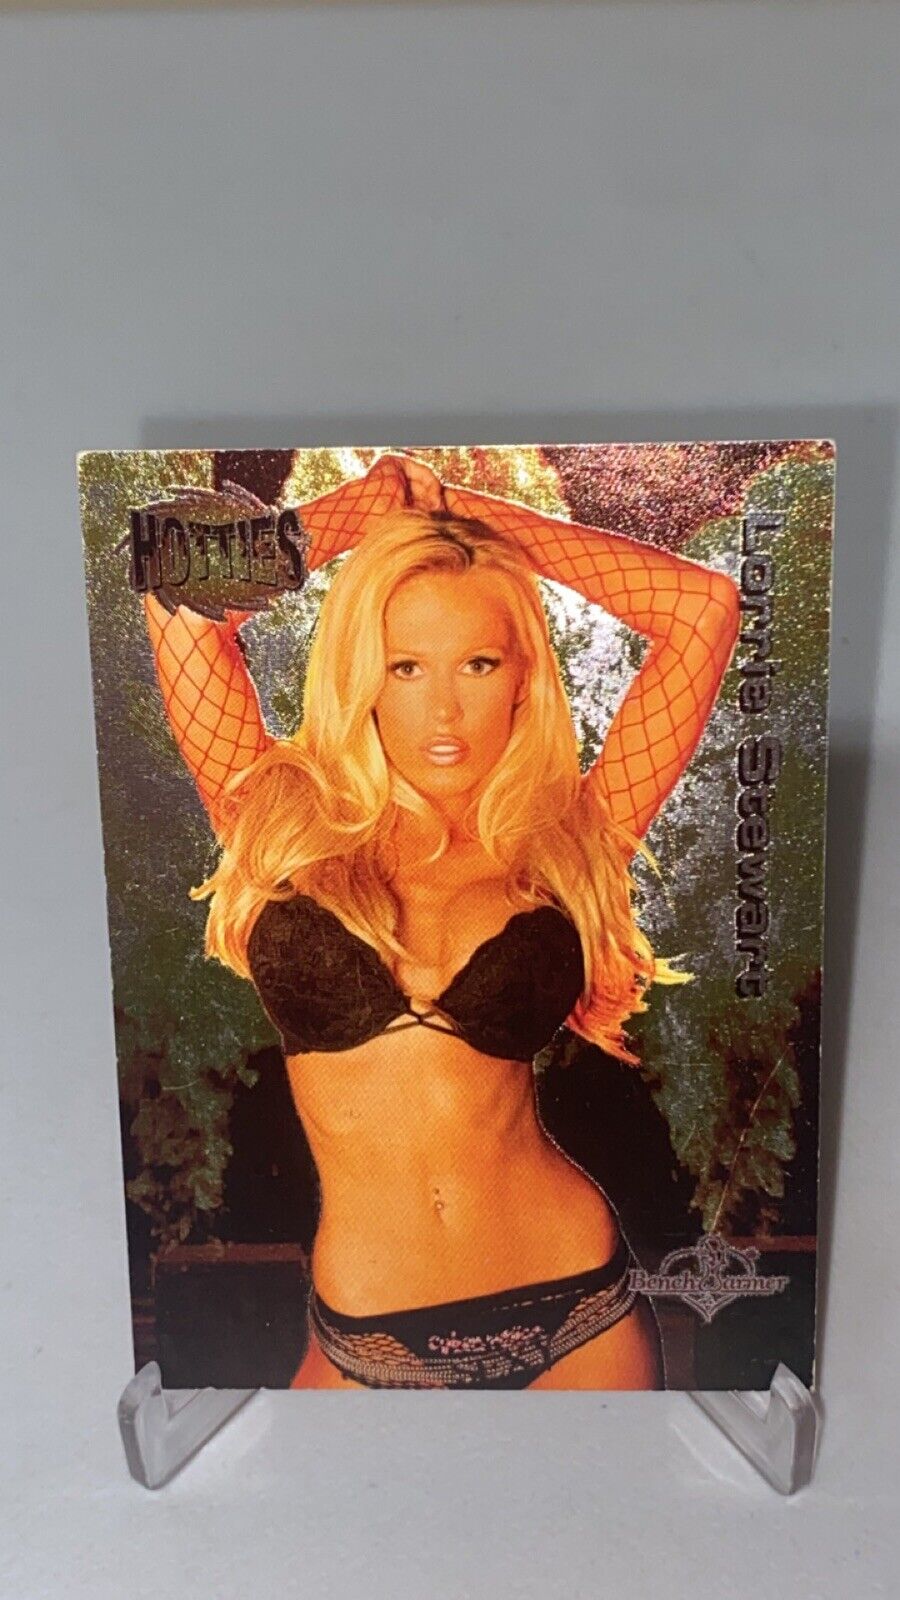 2004 Bench Warmer Lorrie Stewart Hotties Foil Insert Card #6 of 8